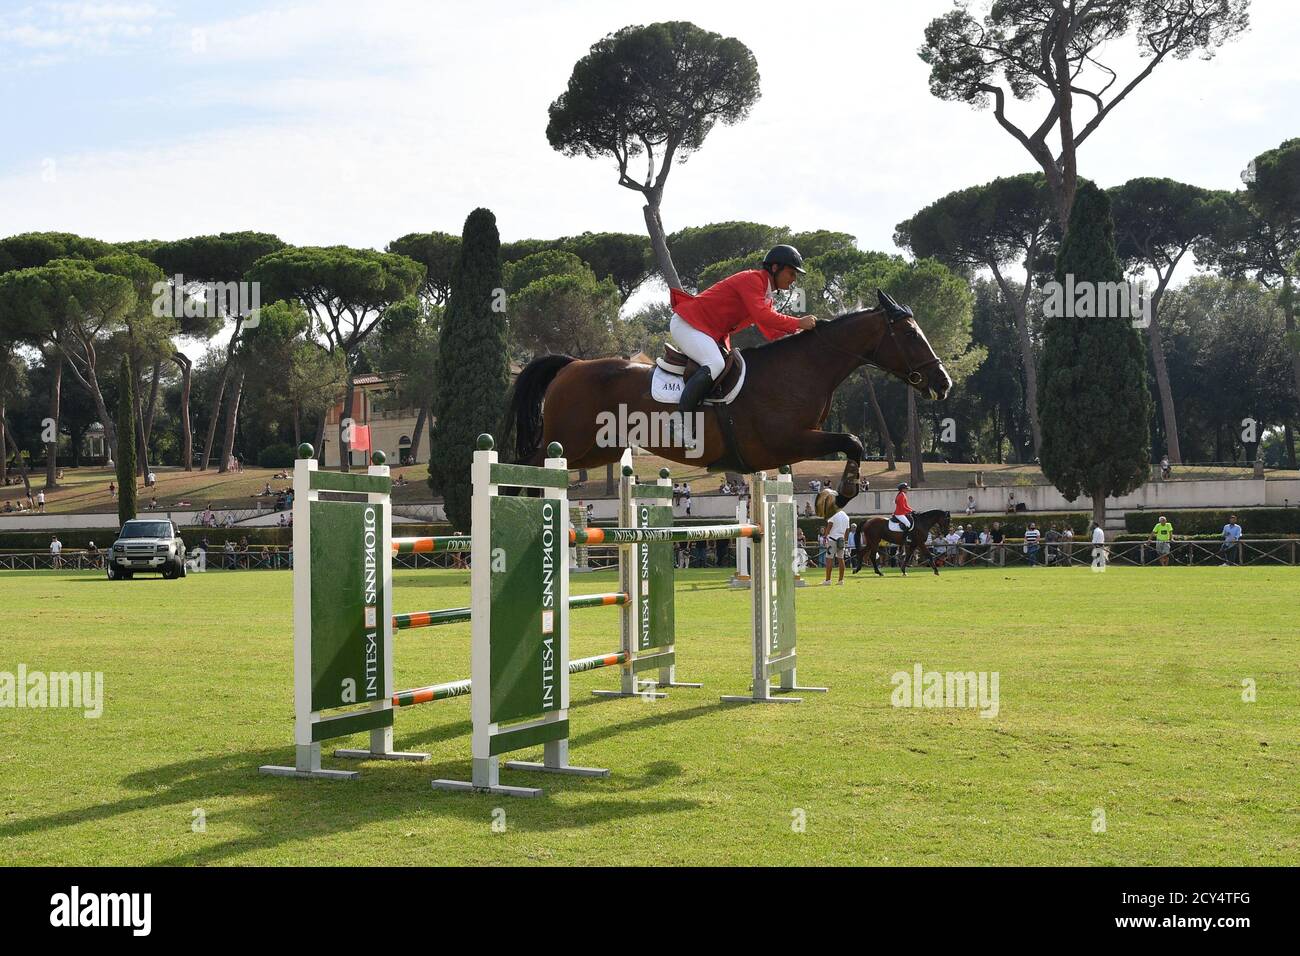 Cavalli a Piazza di Siena - Horses on Piazza di Siena in Rome Stock Photo